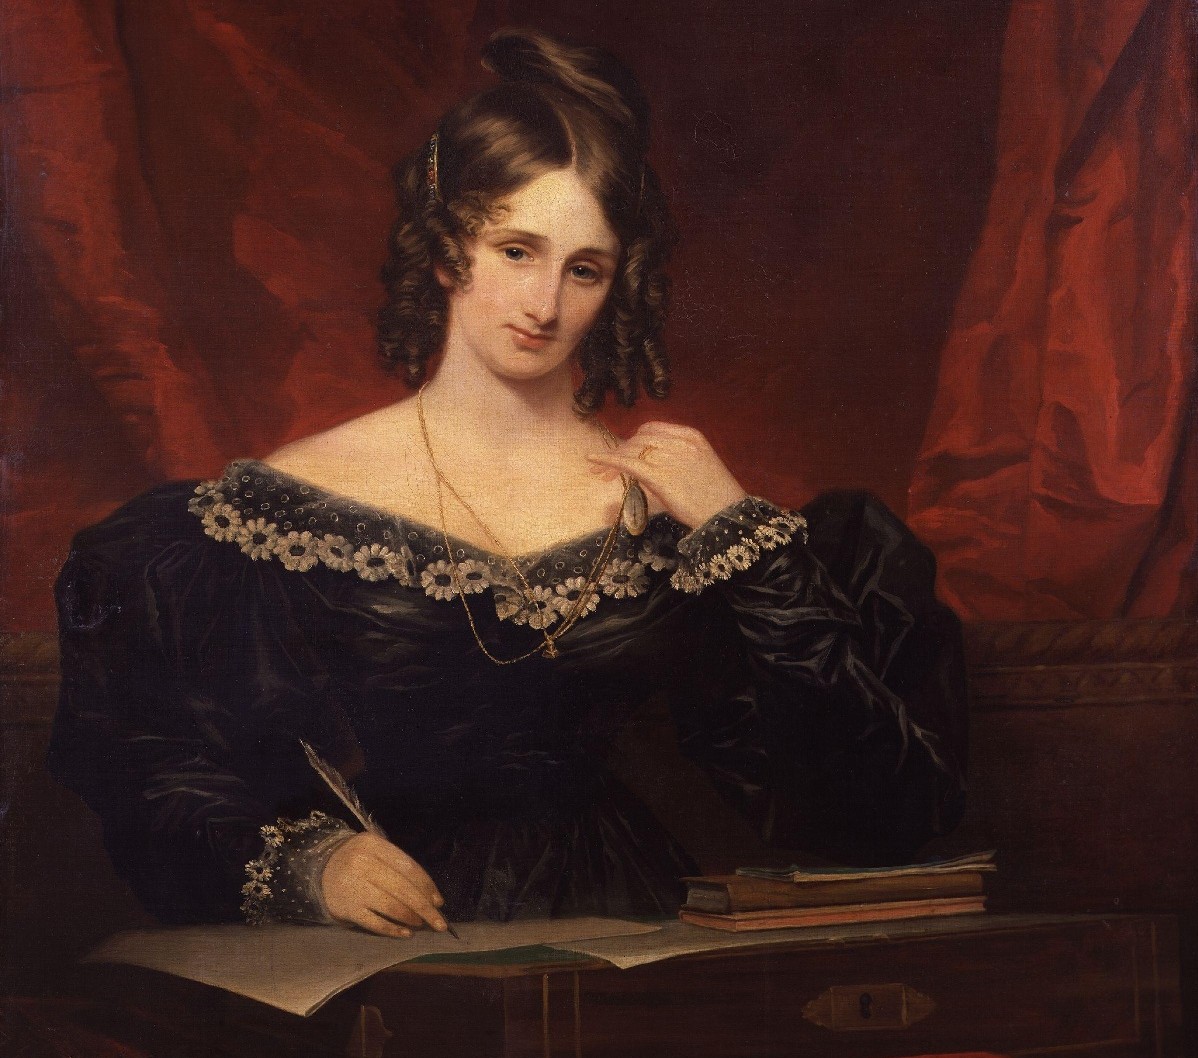 Samuel John Stump: Mary Shelley